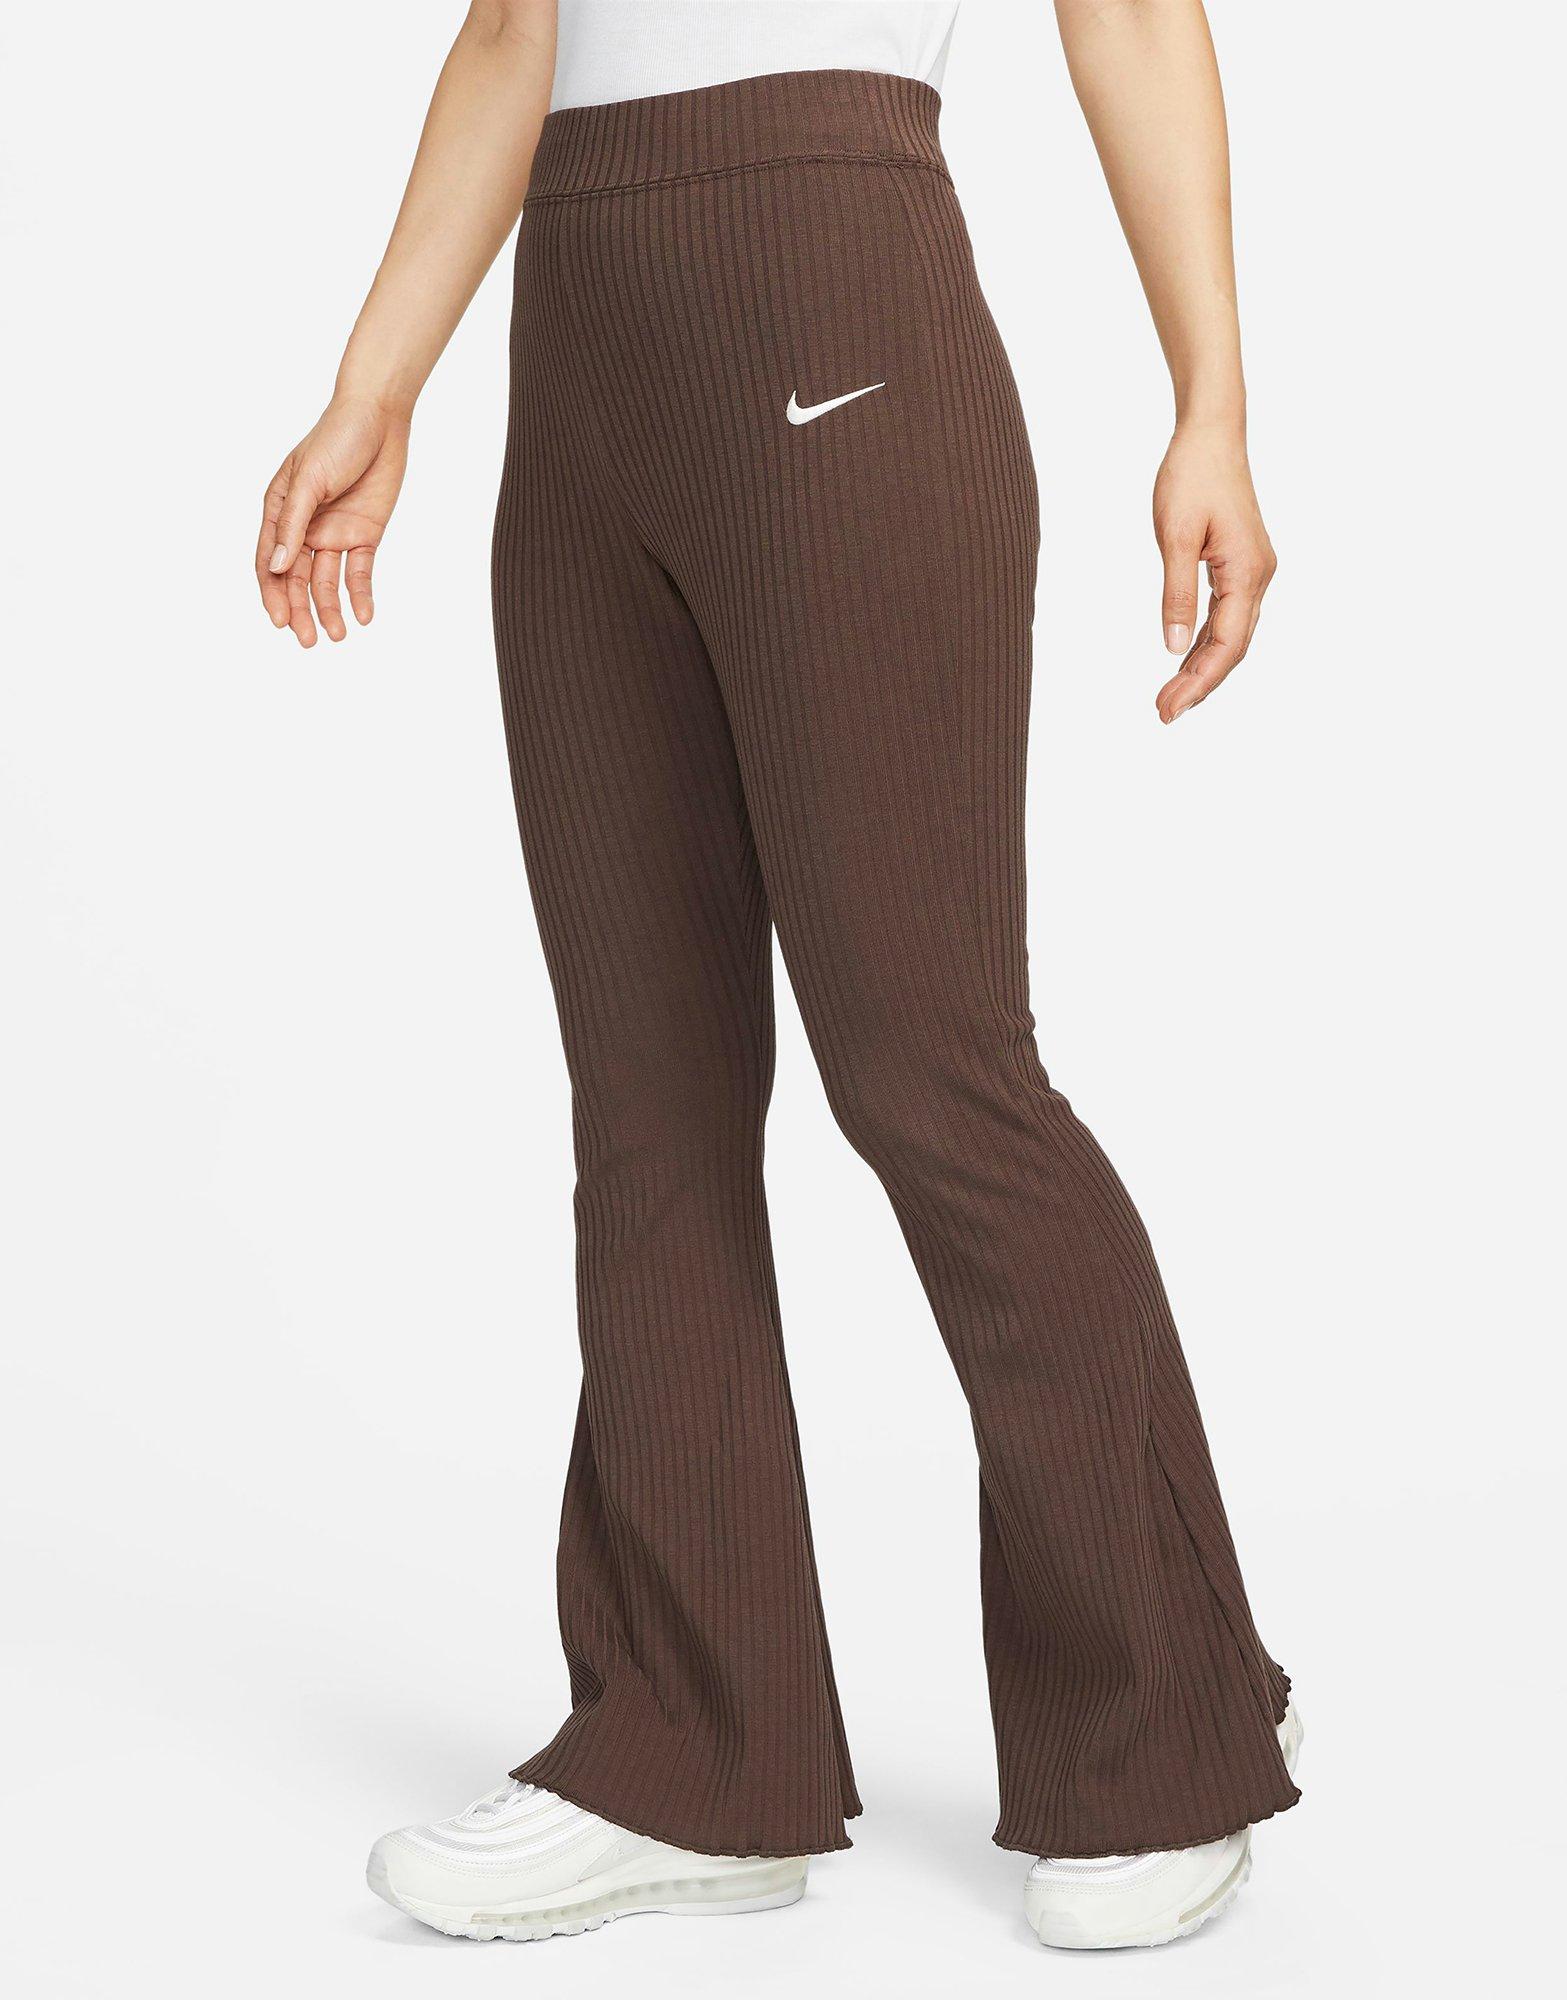 Brown Nike Sportswear High-Waisted Ribbed Jersey Pants Women's